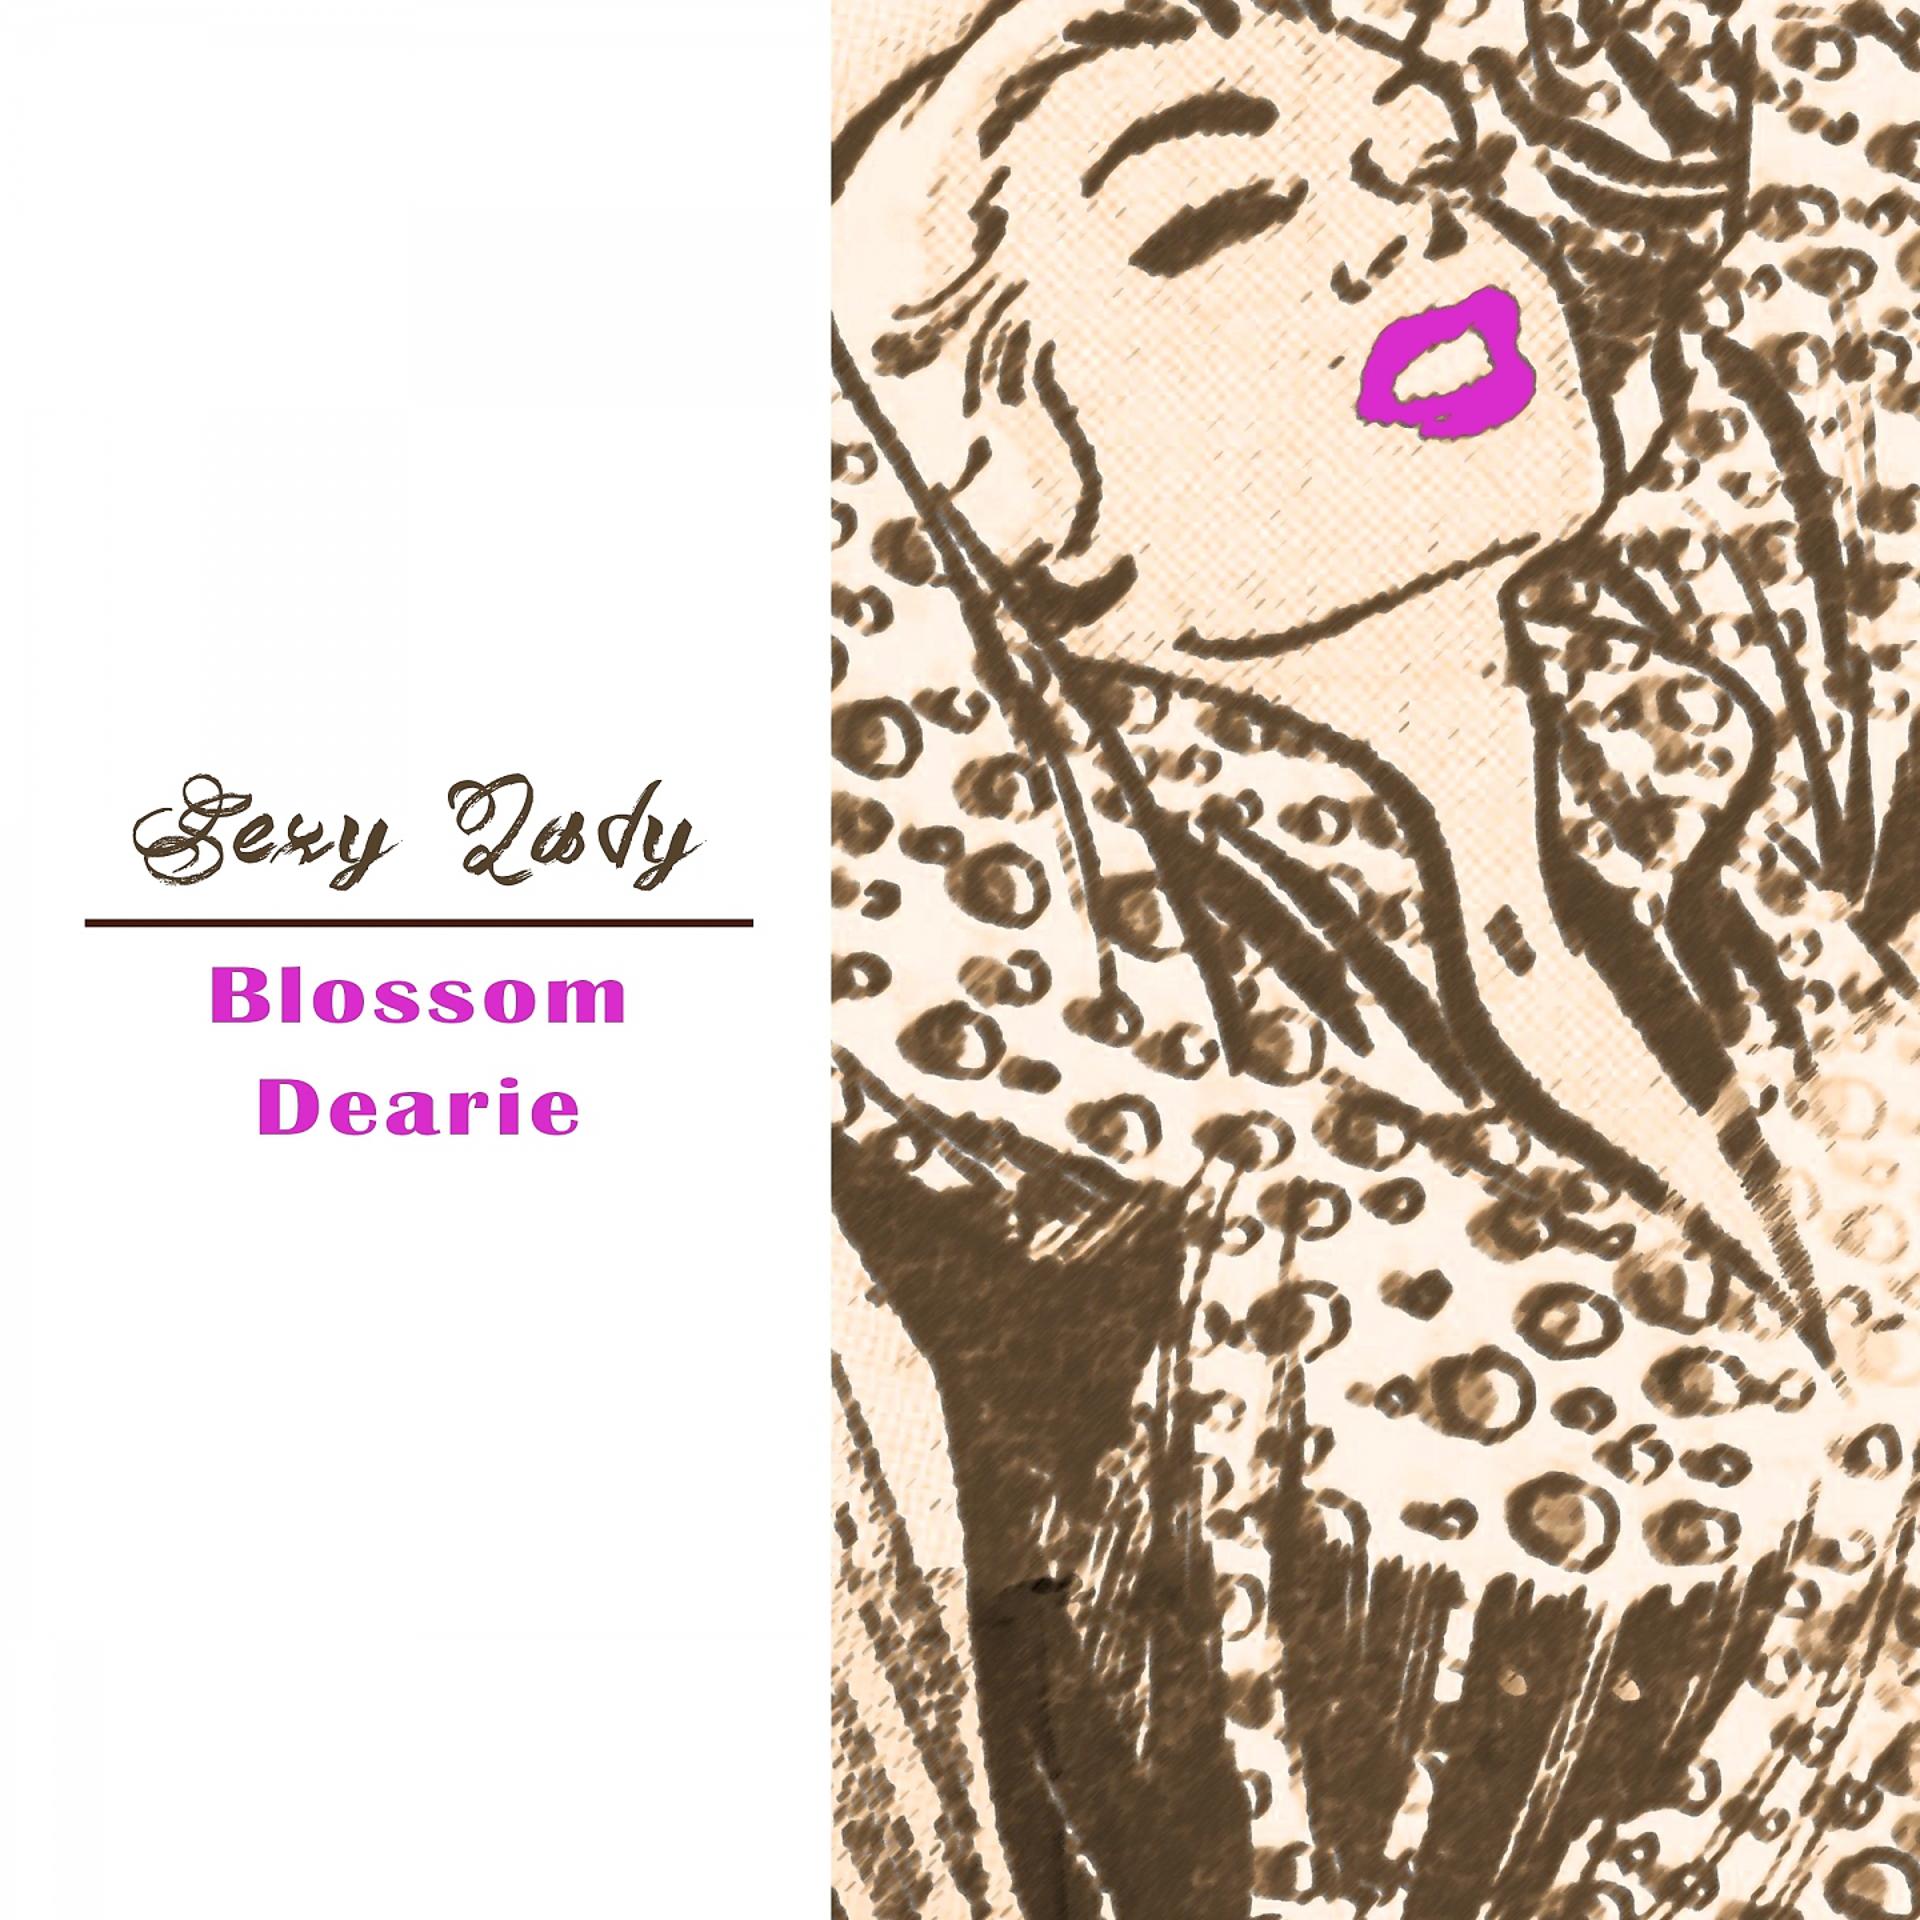 Постер альбома Sexy Lady